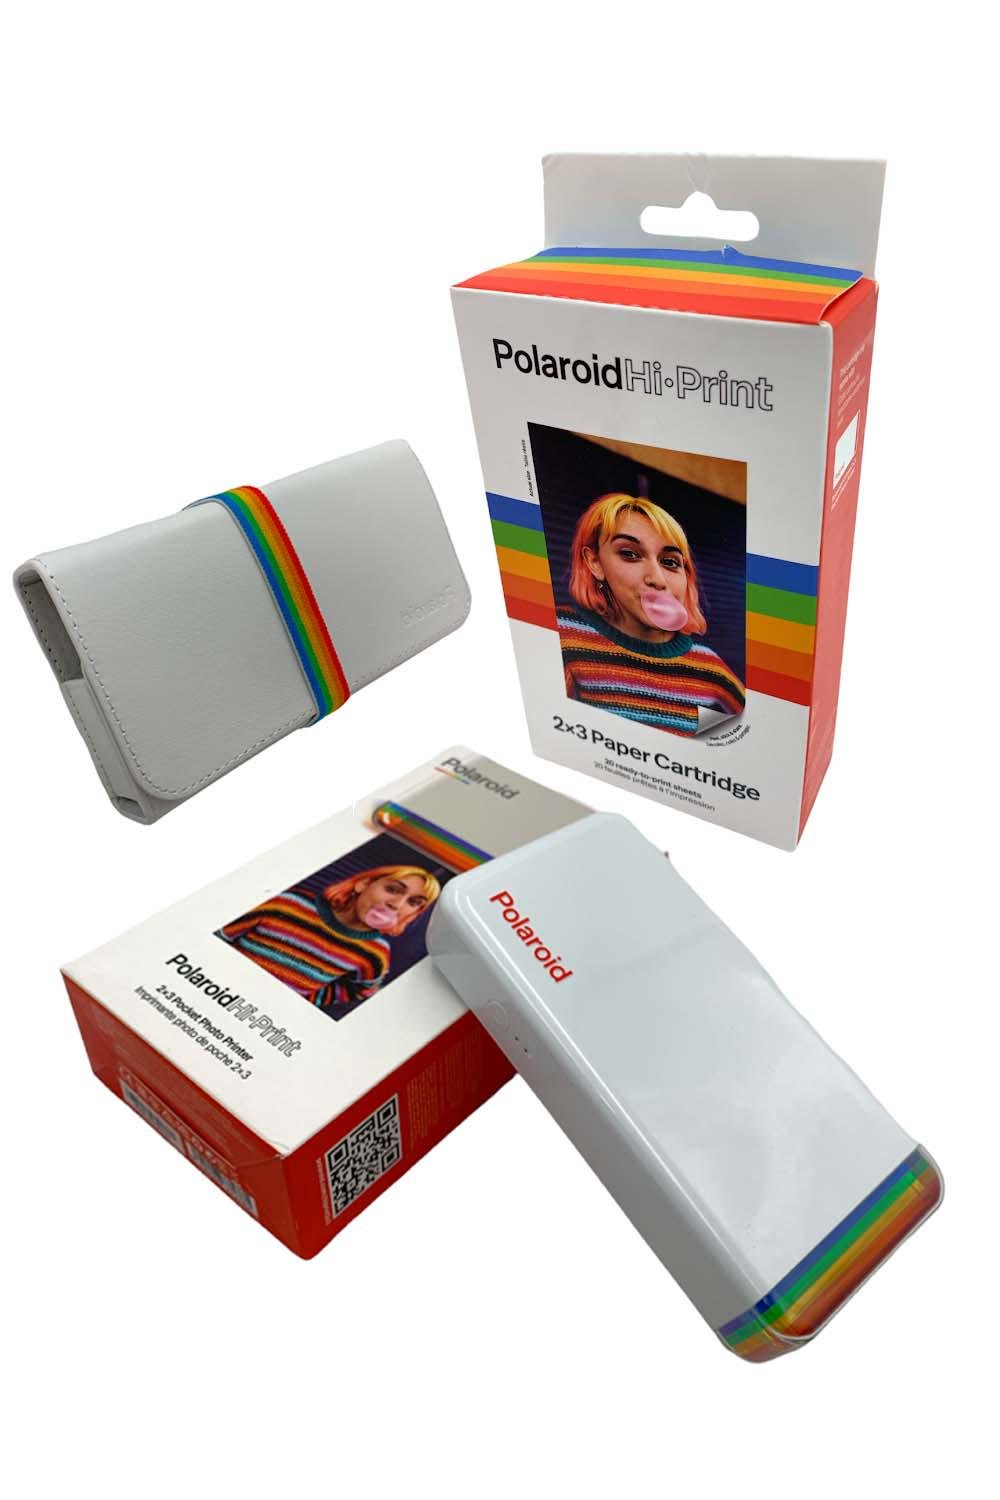 Polaroid 9046 Hi-Print Photo Printer 2x3 Cartridge 20 Sheets